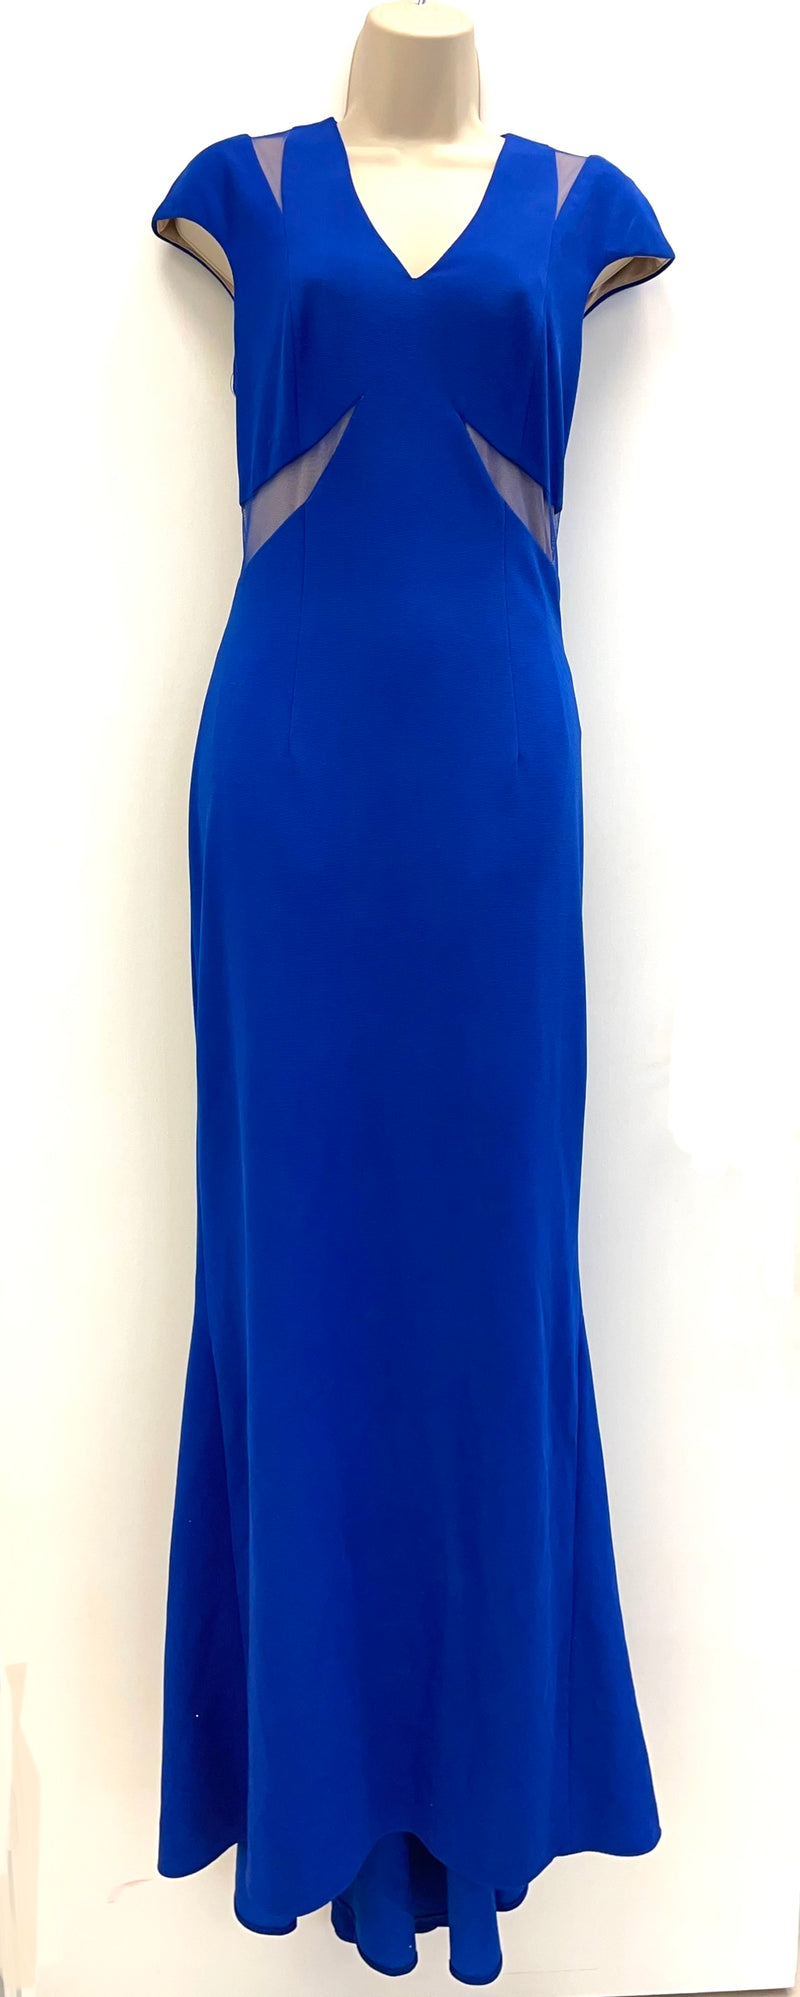 Formal Royal Blue Maxi Dress Small Size